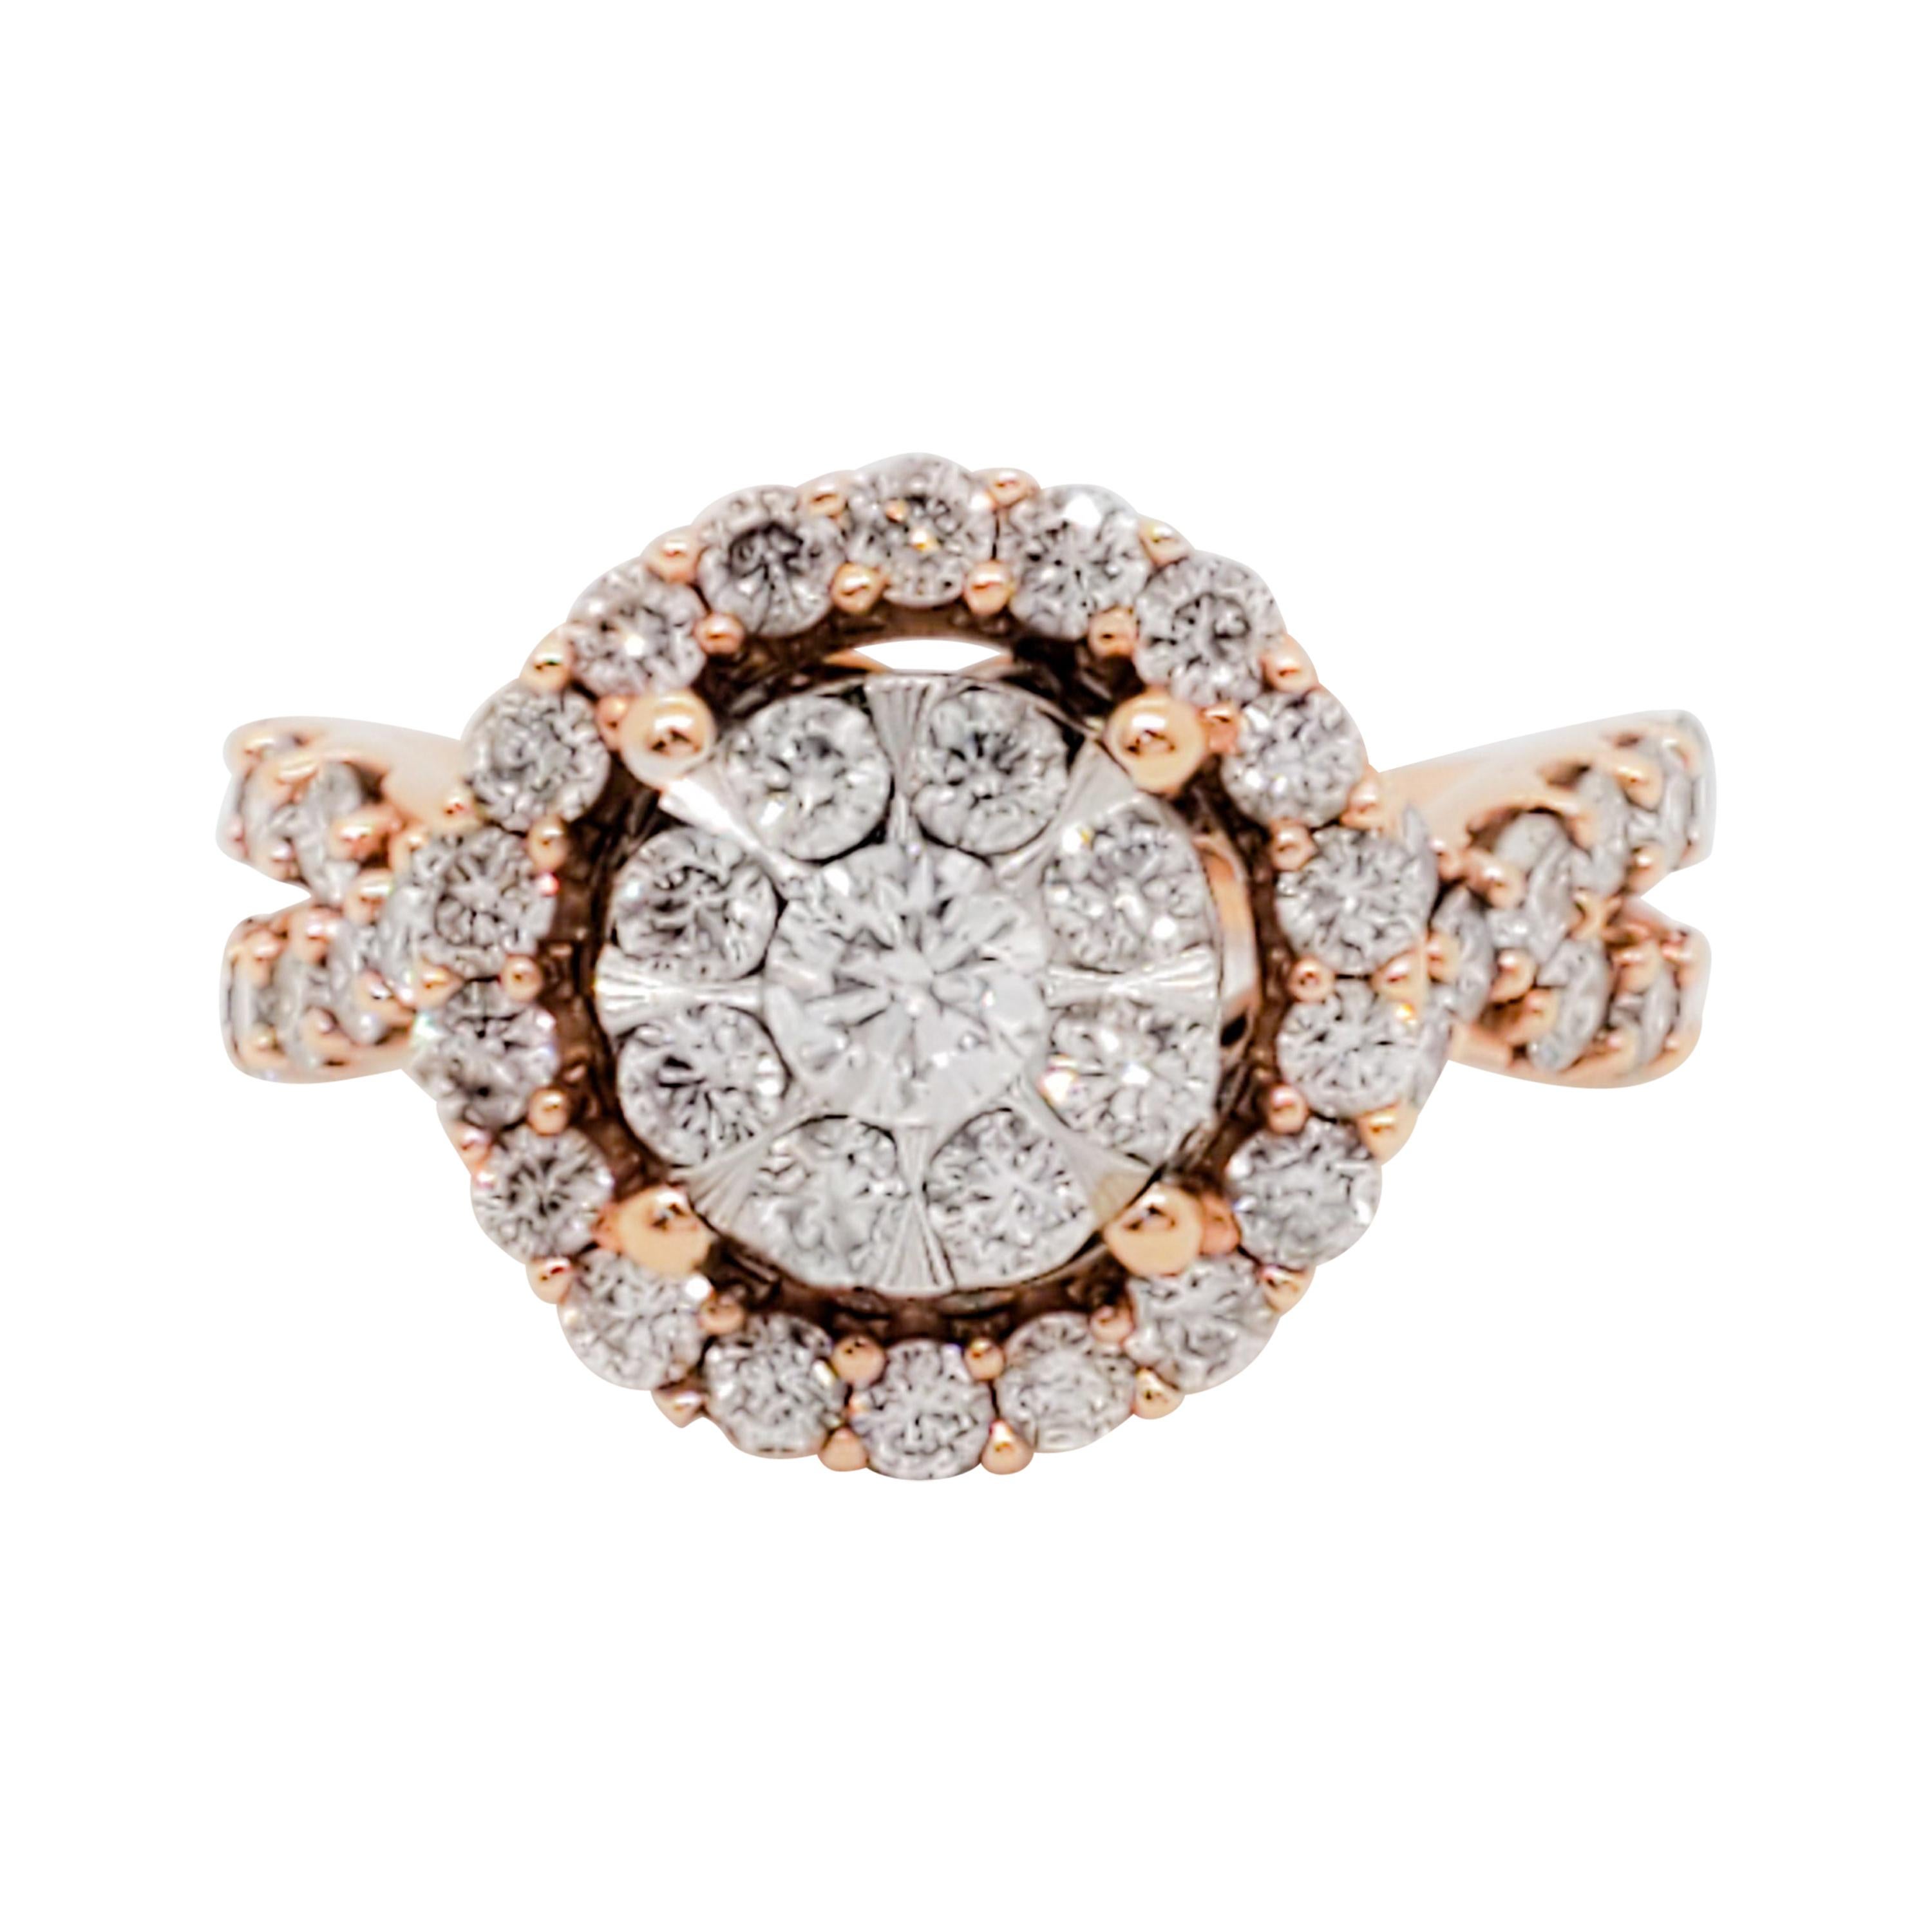 Estate White Diamond Cluster Ring in 14k Rose Gold